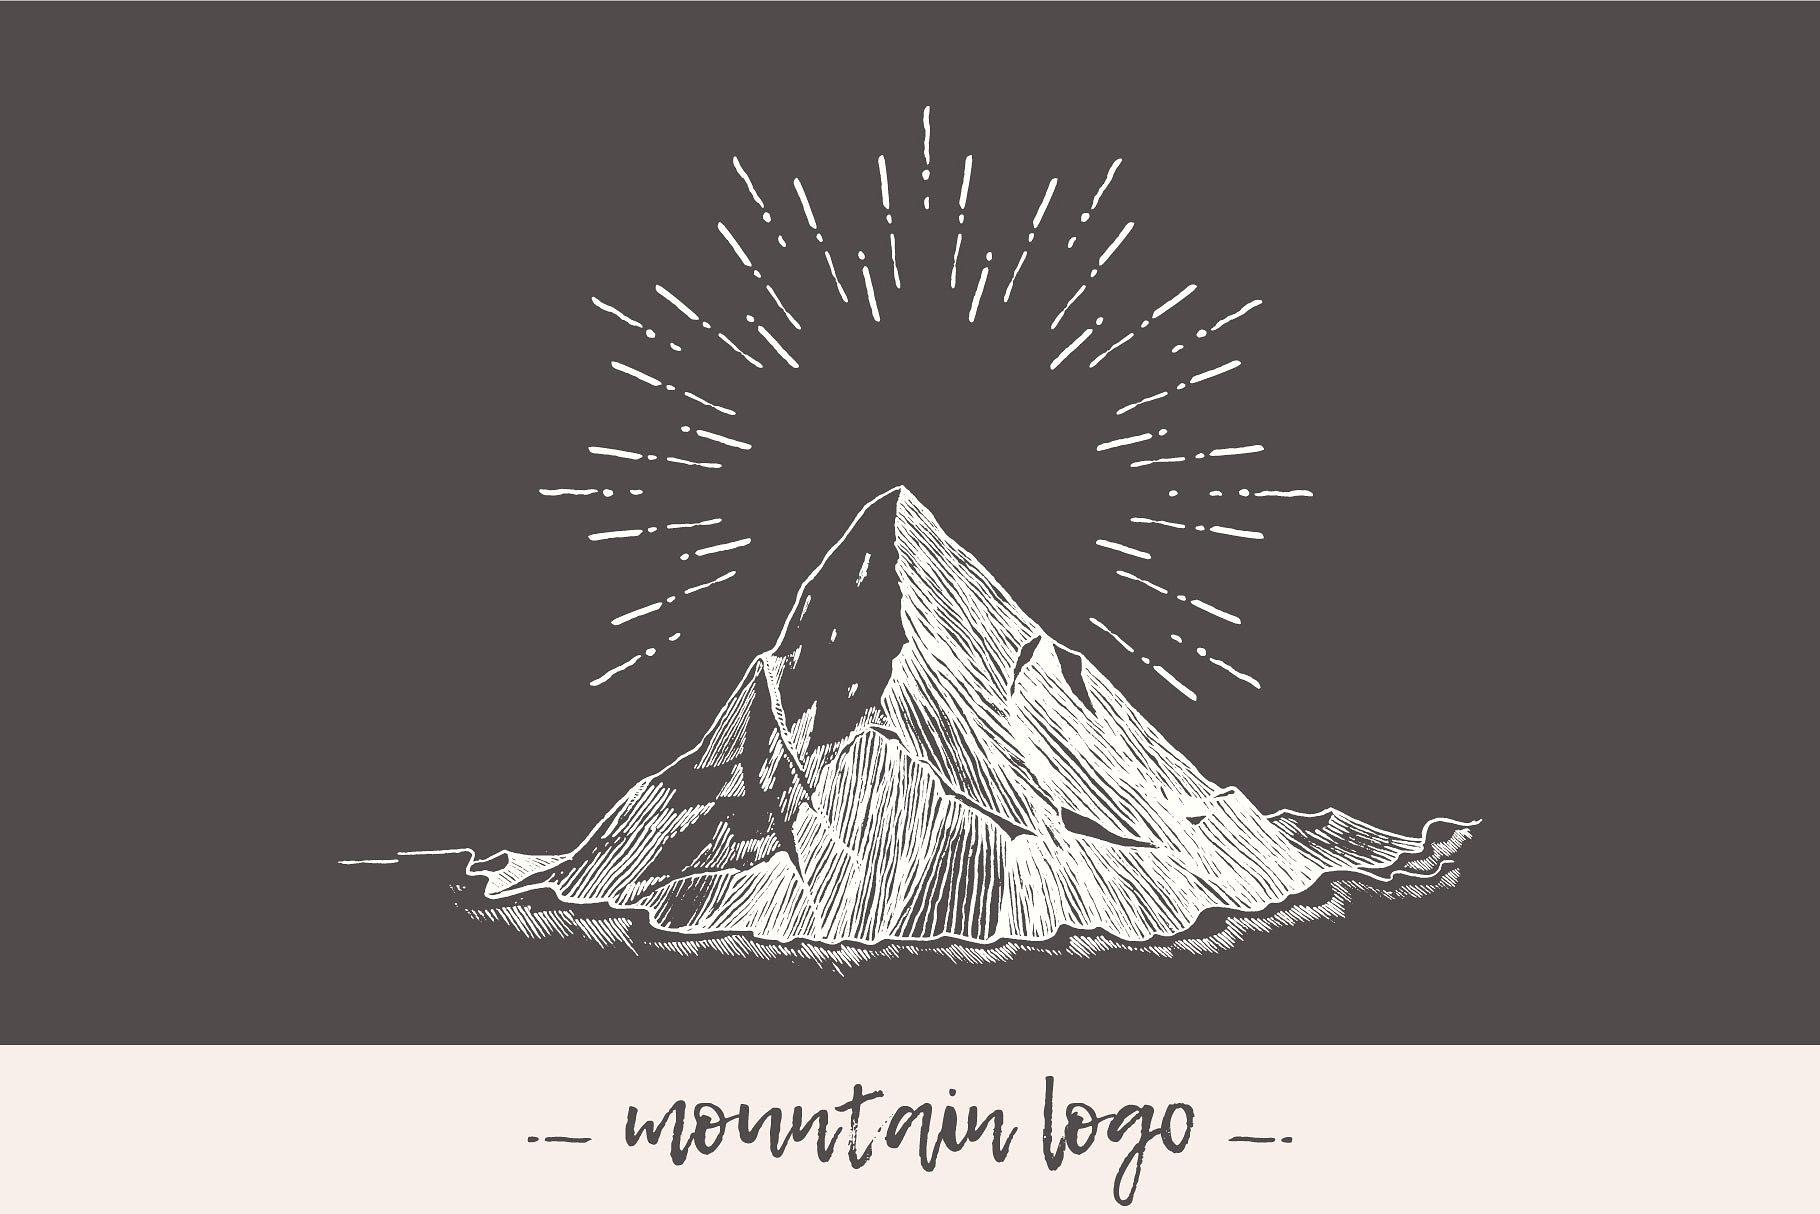 大山素描插画 Mountain logo with spar